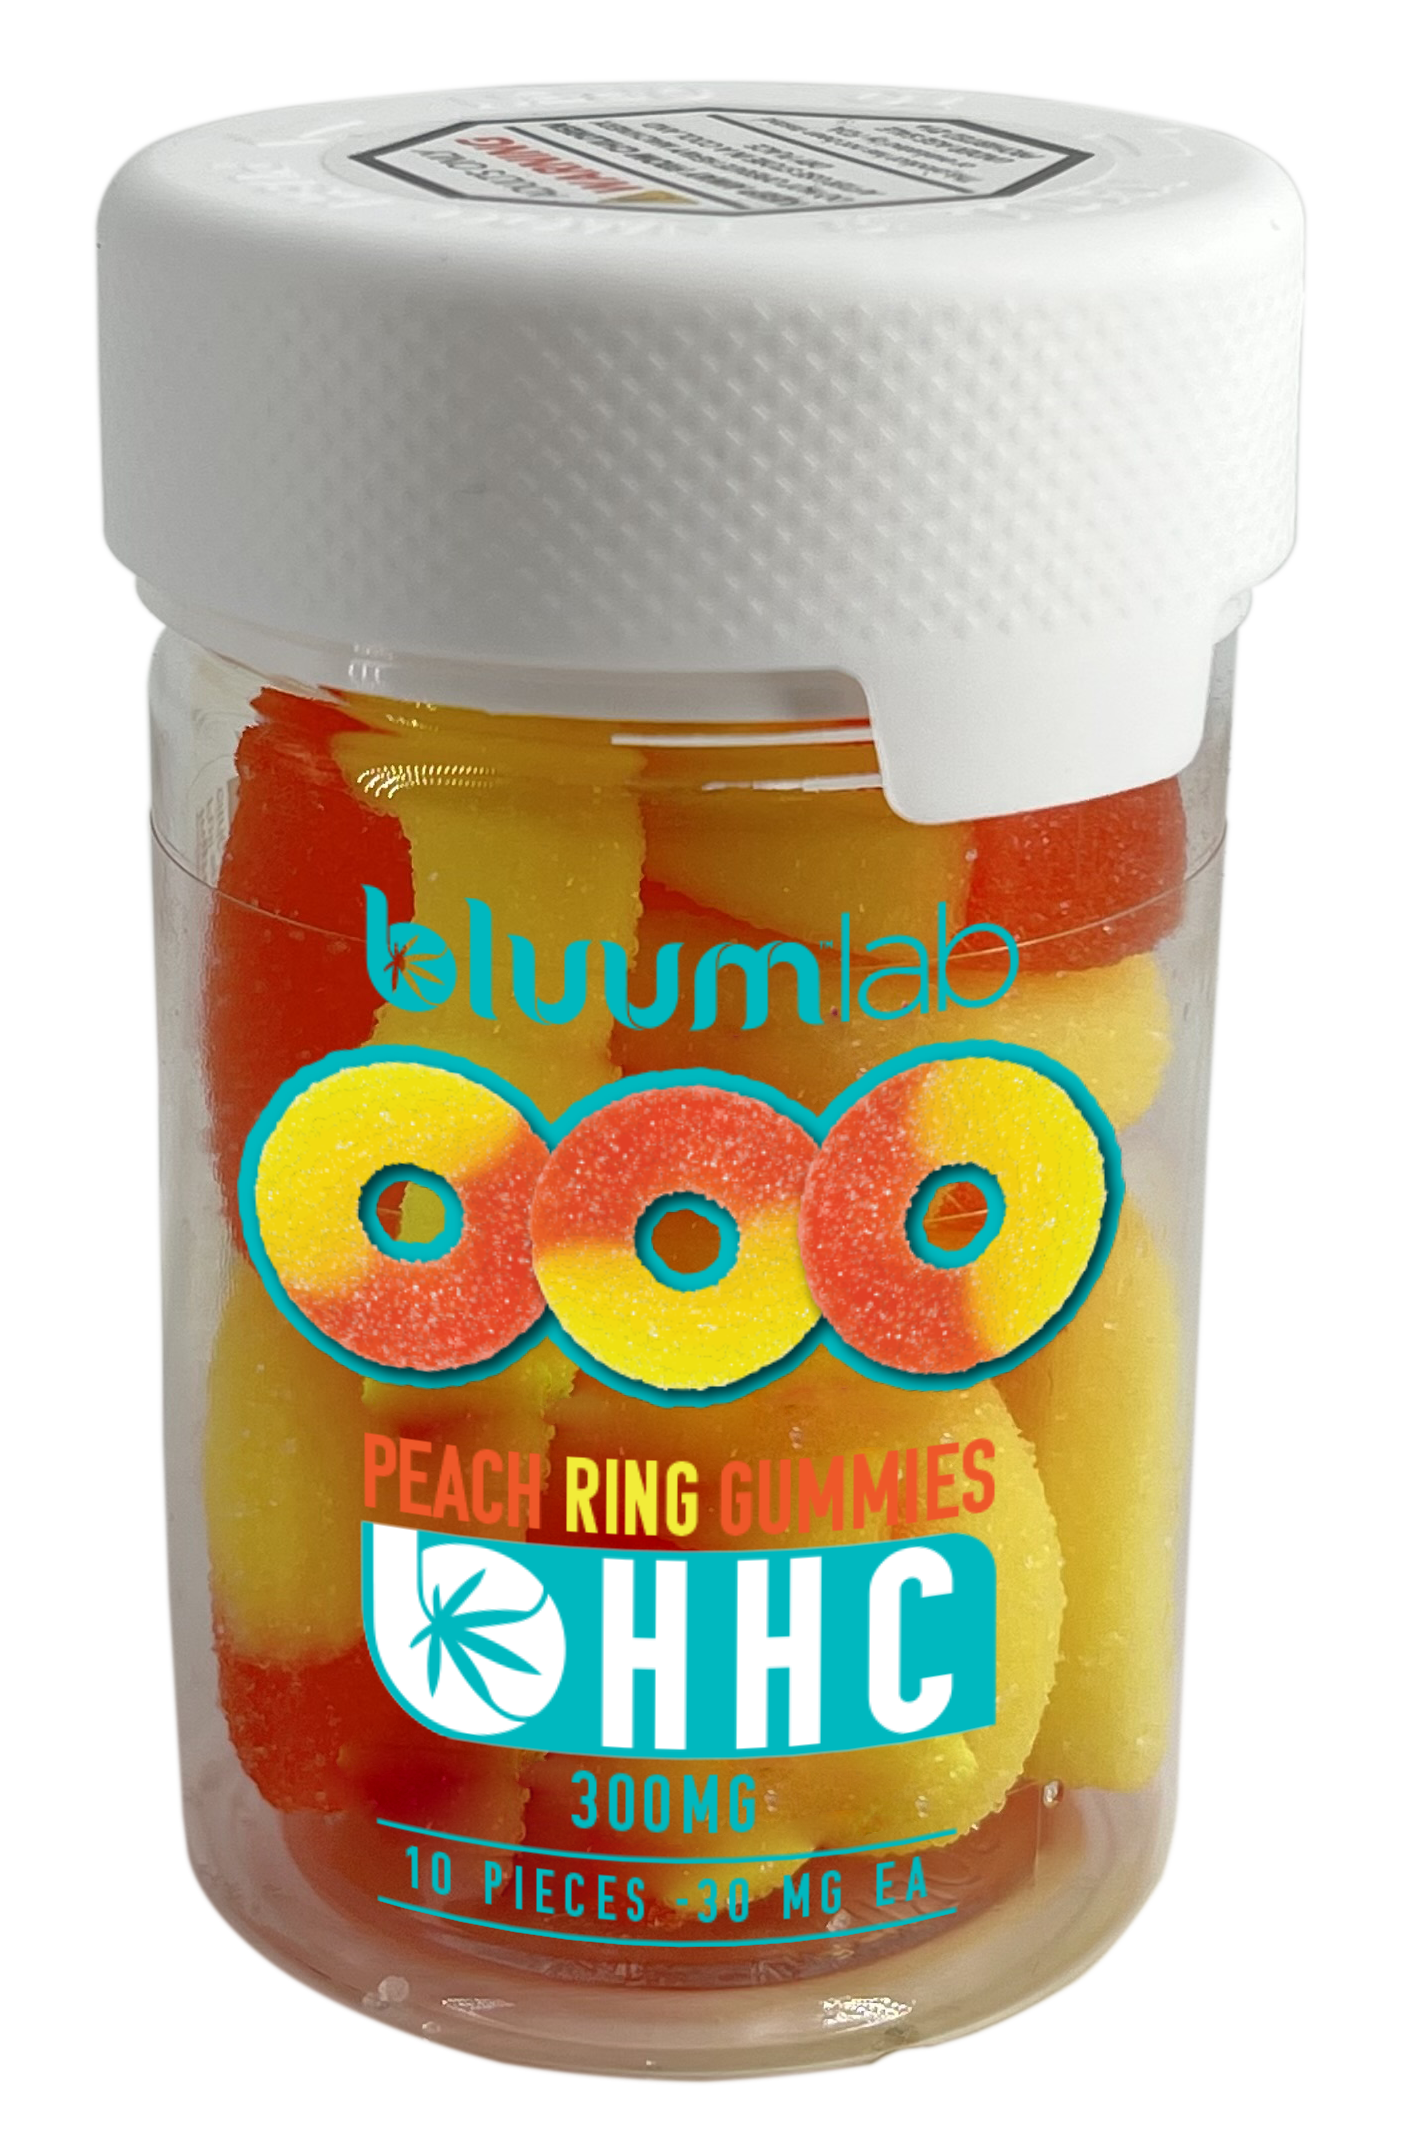 Bluumlab - Peach Rings - HHC